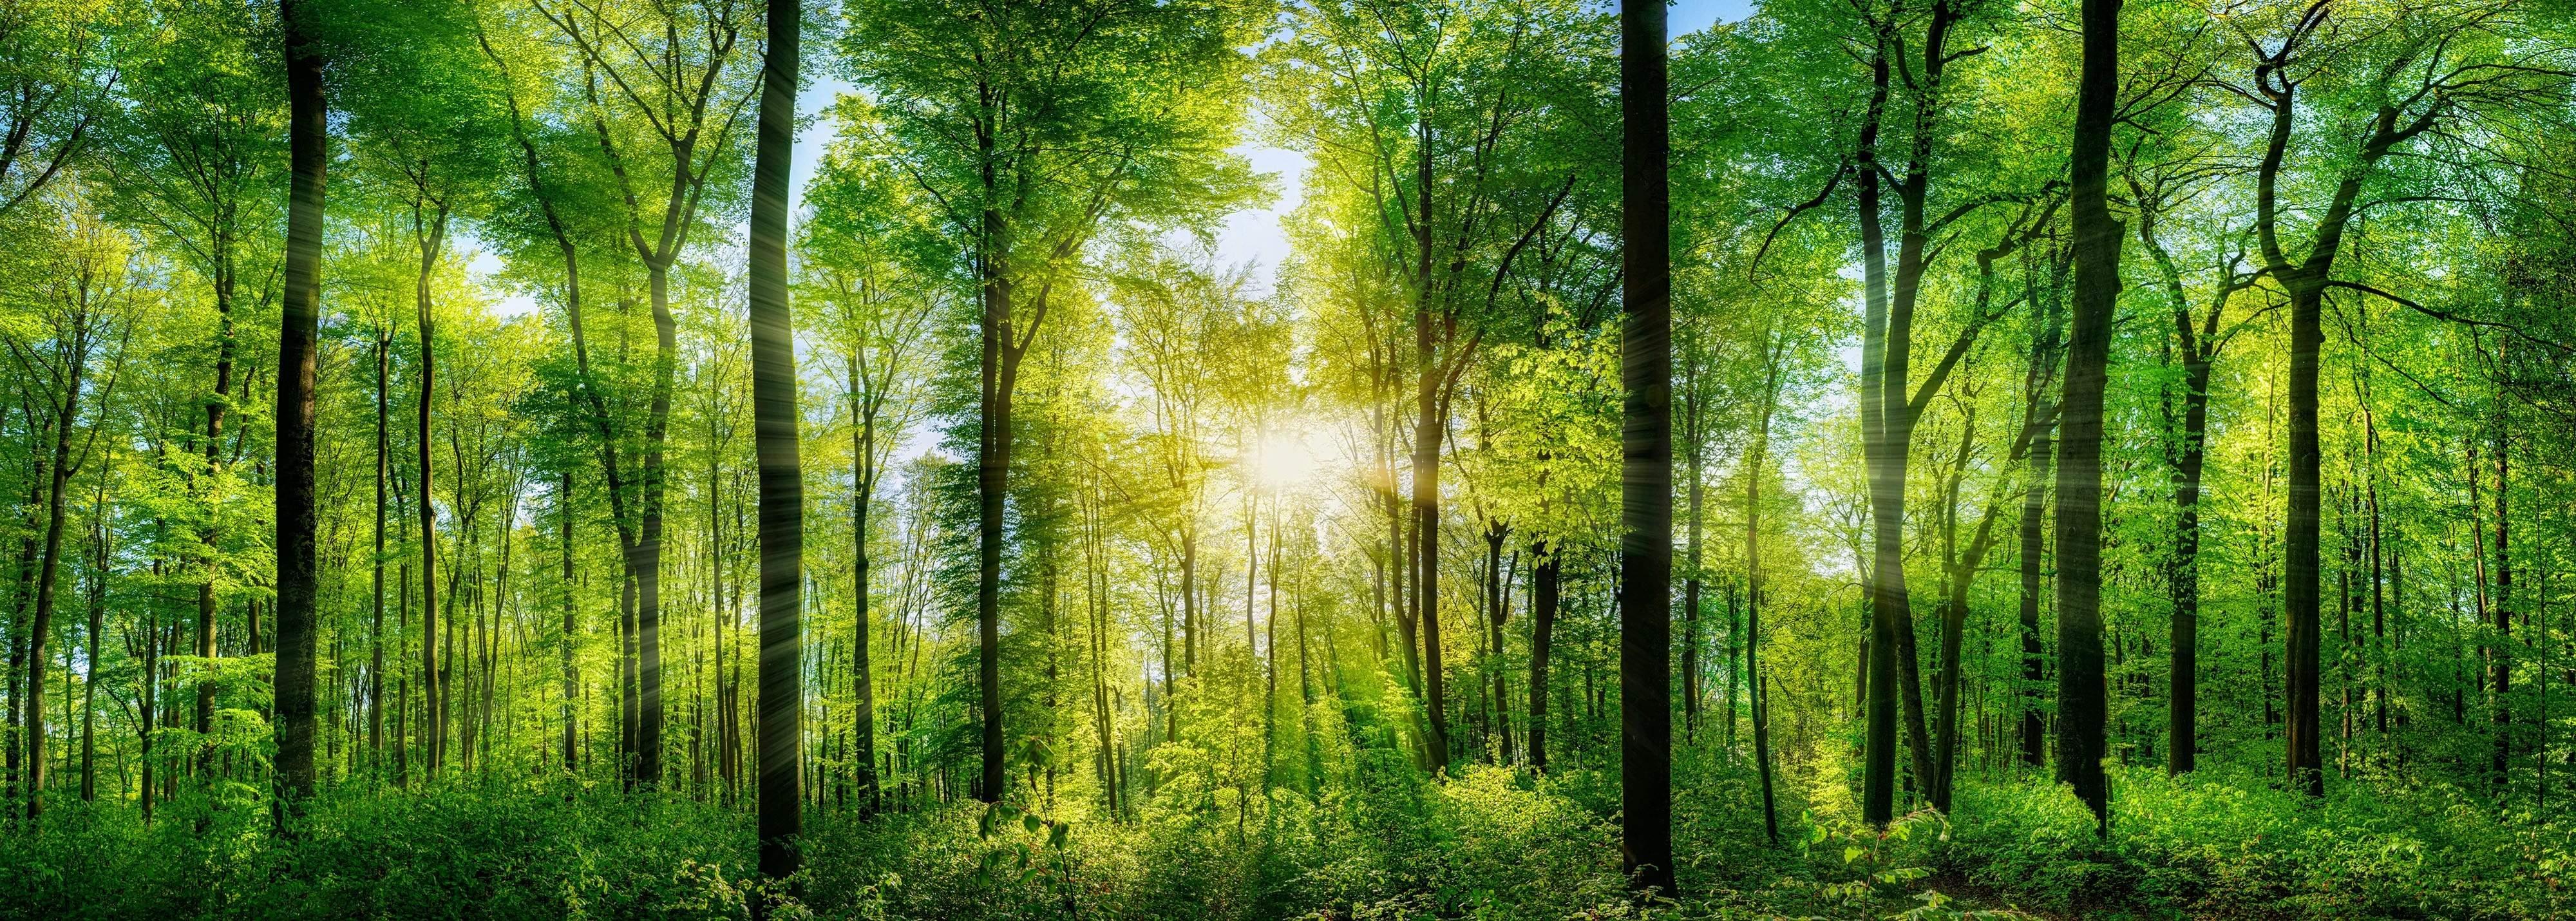 Sunbeams through green forest